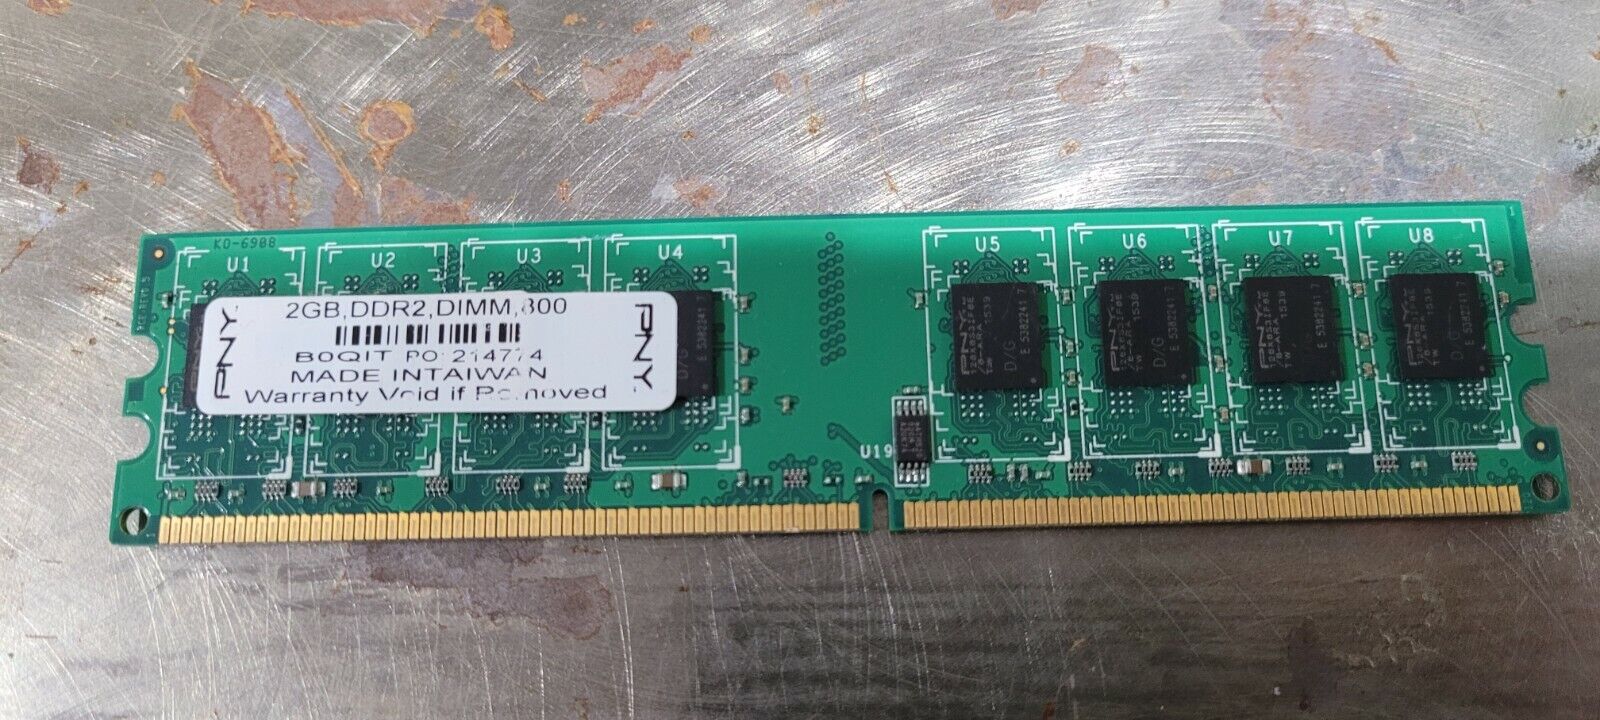 PNY 2GB DDR DIMM Desktop Ram B0QIT TESTED 